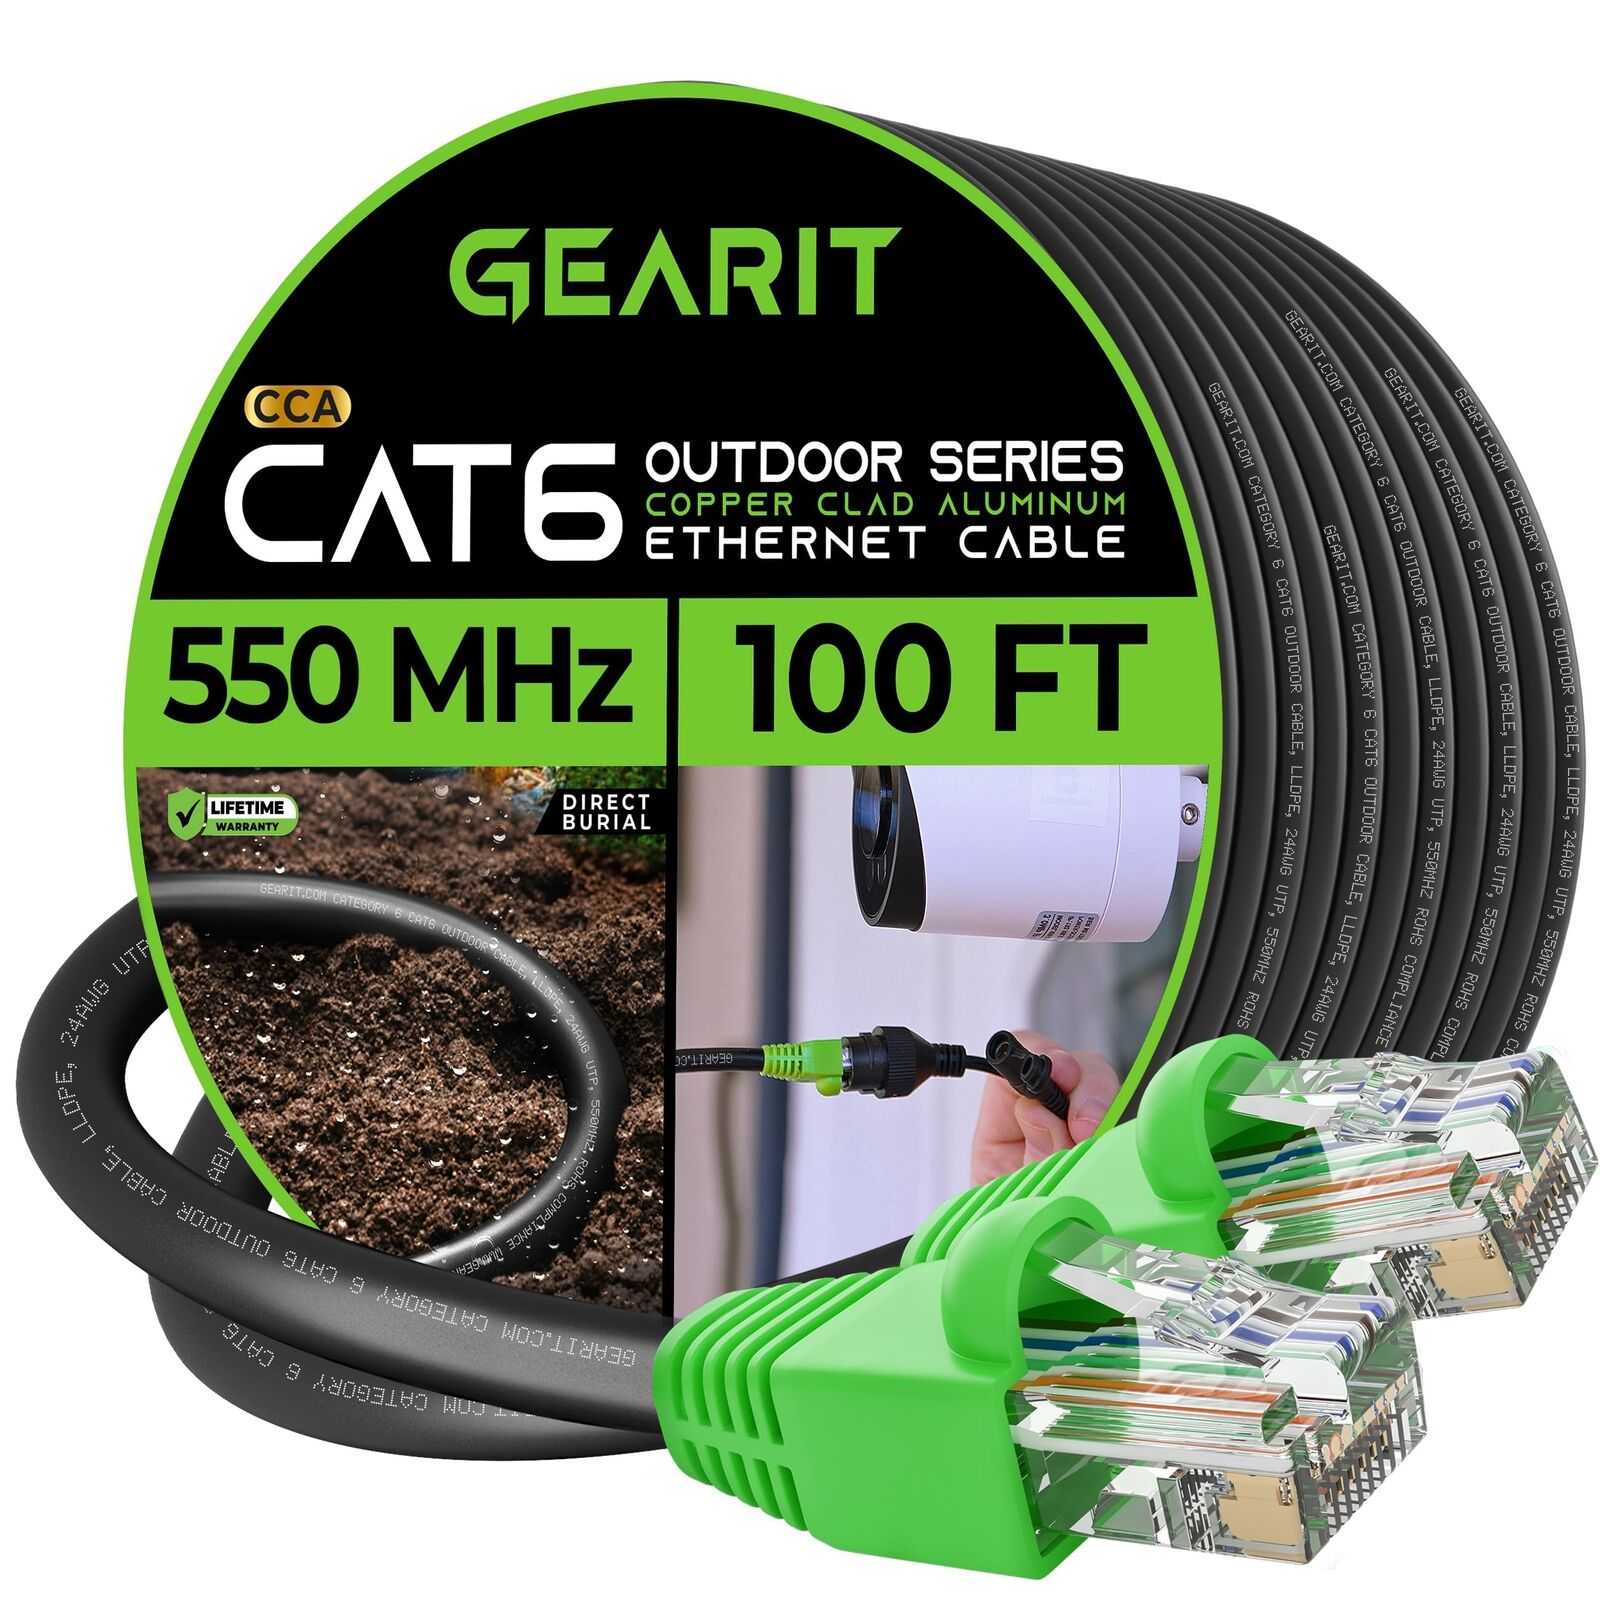 GearIT Cat6 Outdoor Ethernet Cable (100 Feet) CCA Copper Clad, Waterproof, Di...